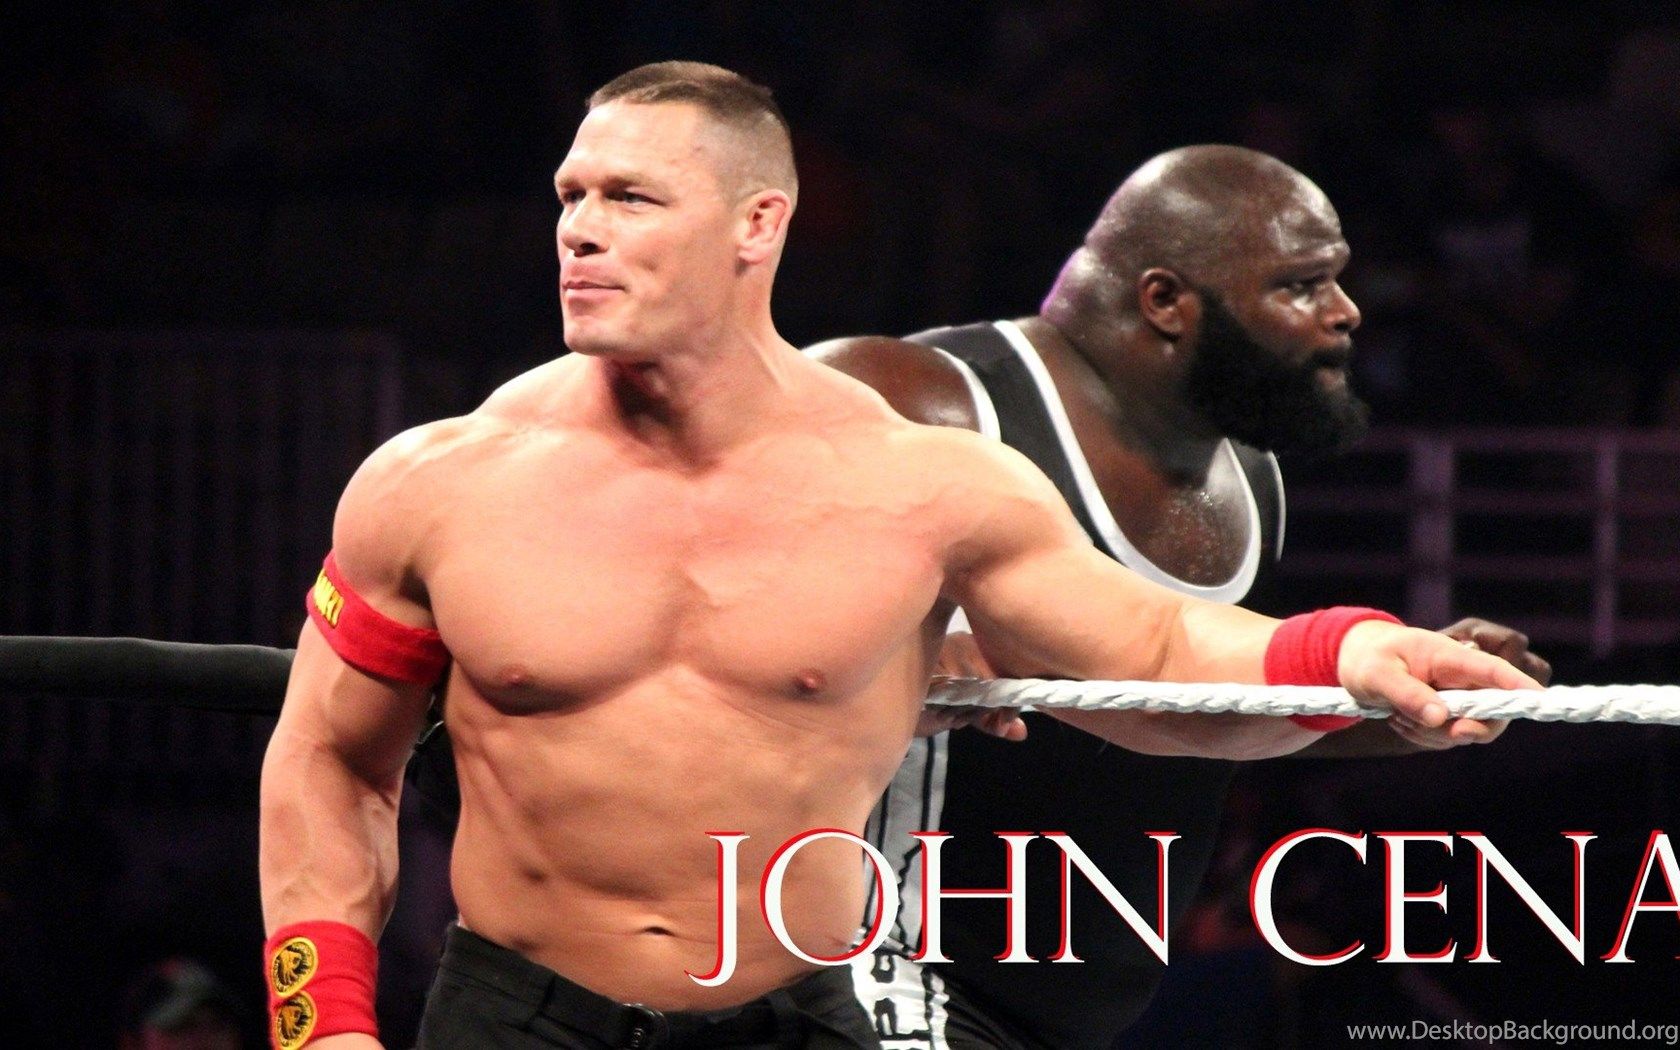 Wwe John Cena Wallpaper Download Free High Resolution Desktop Background